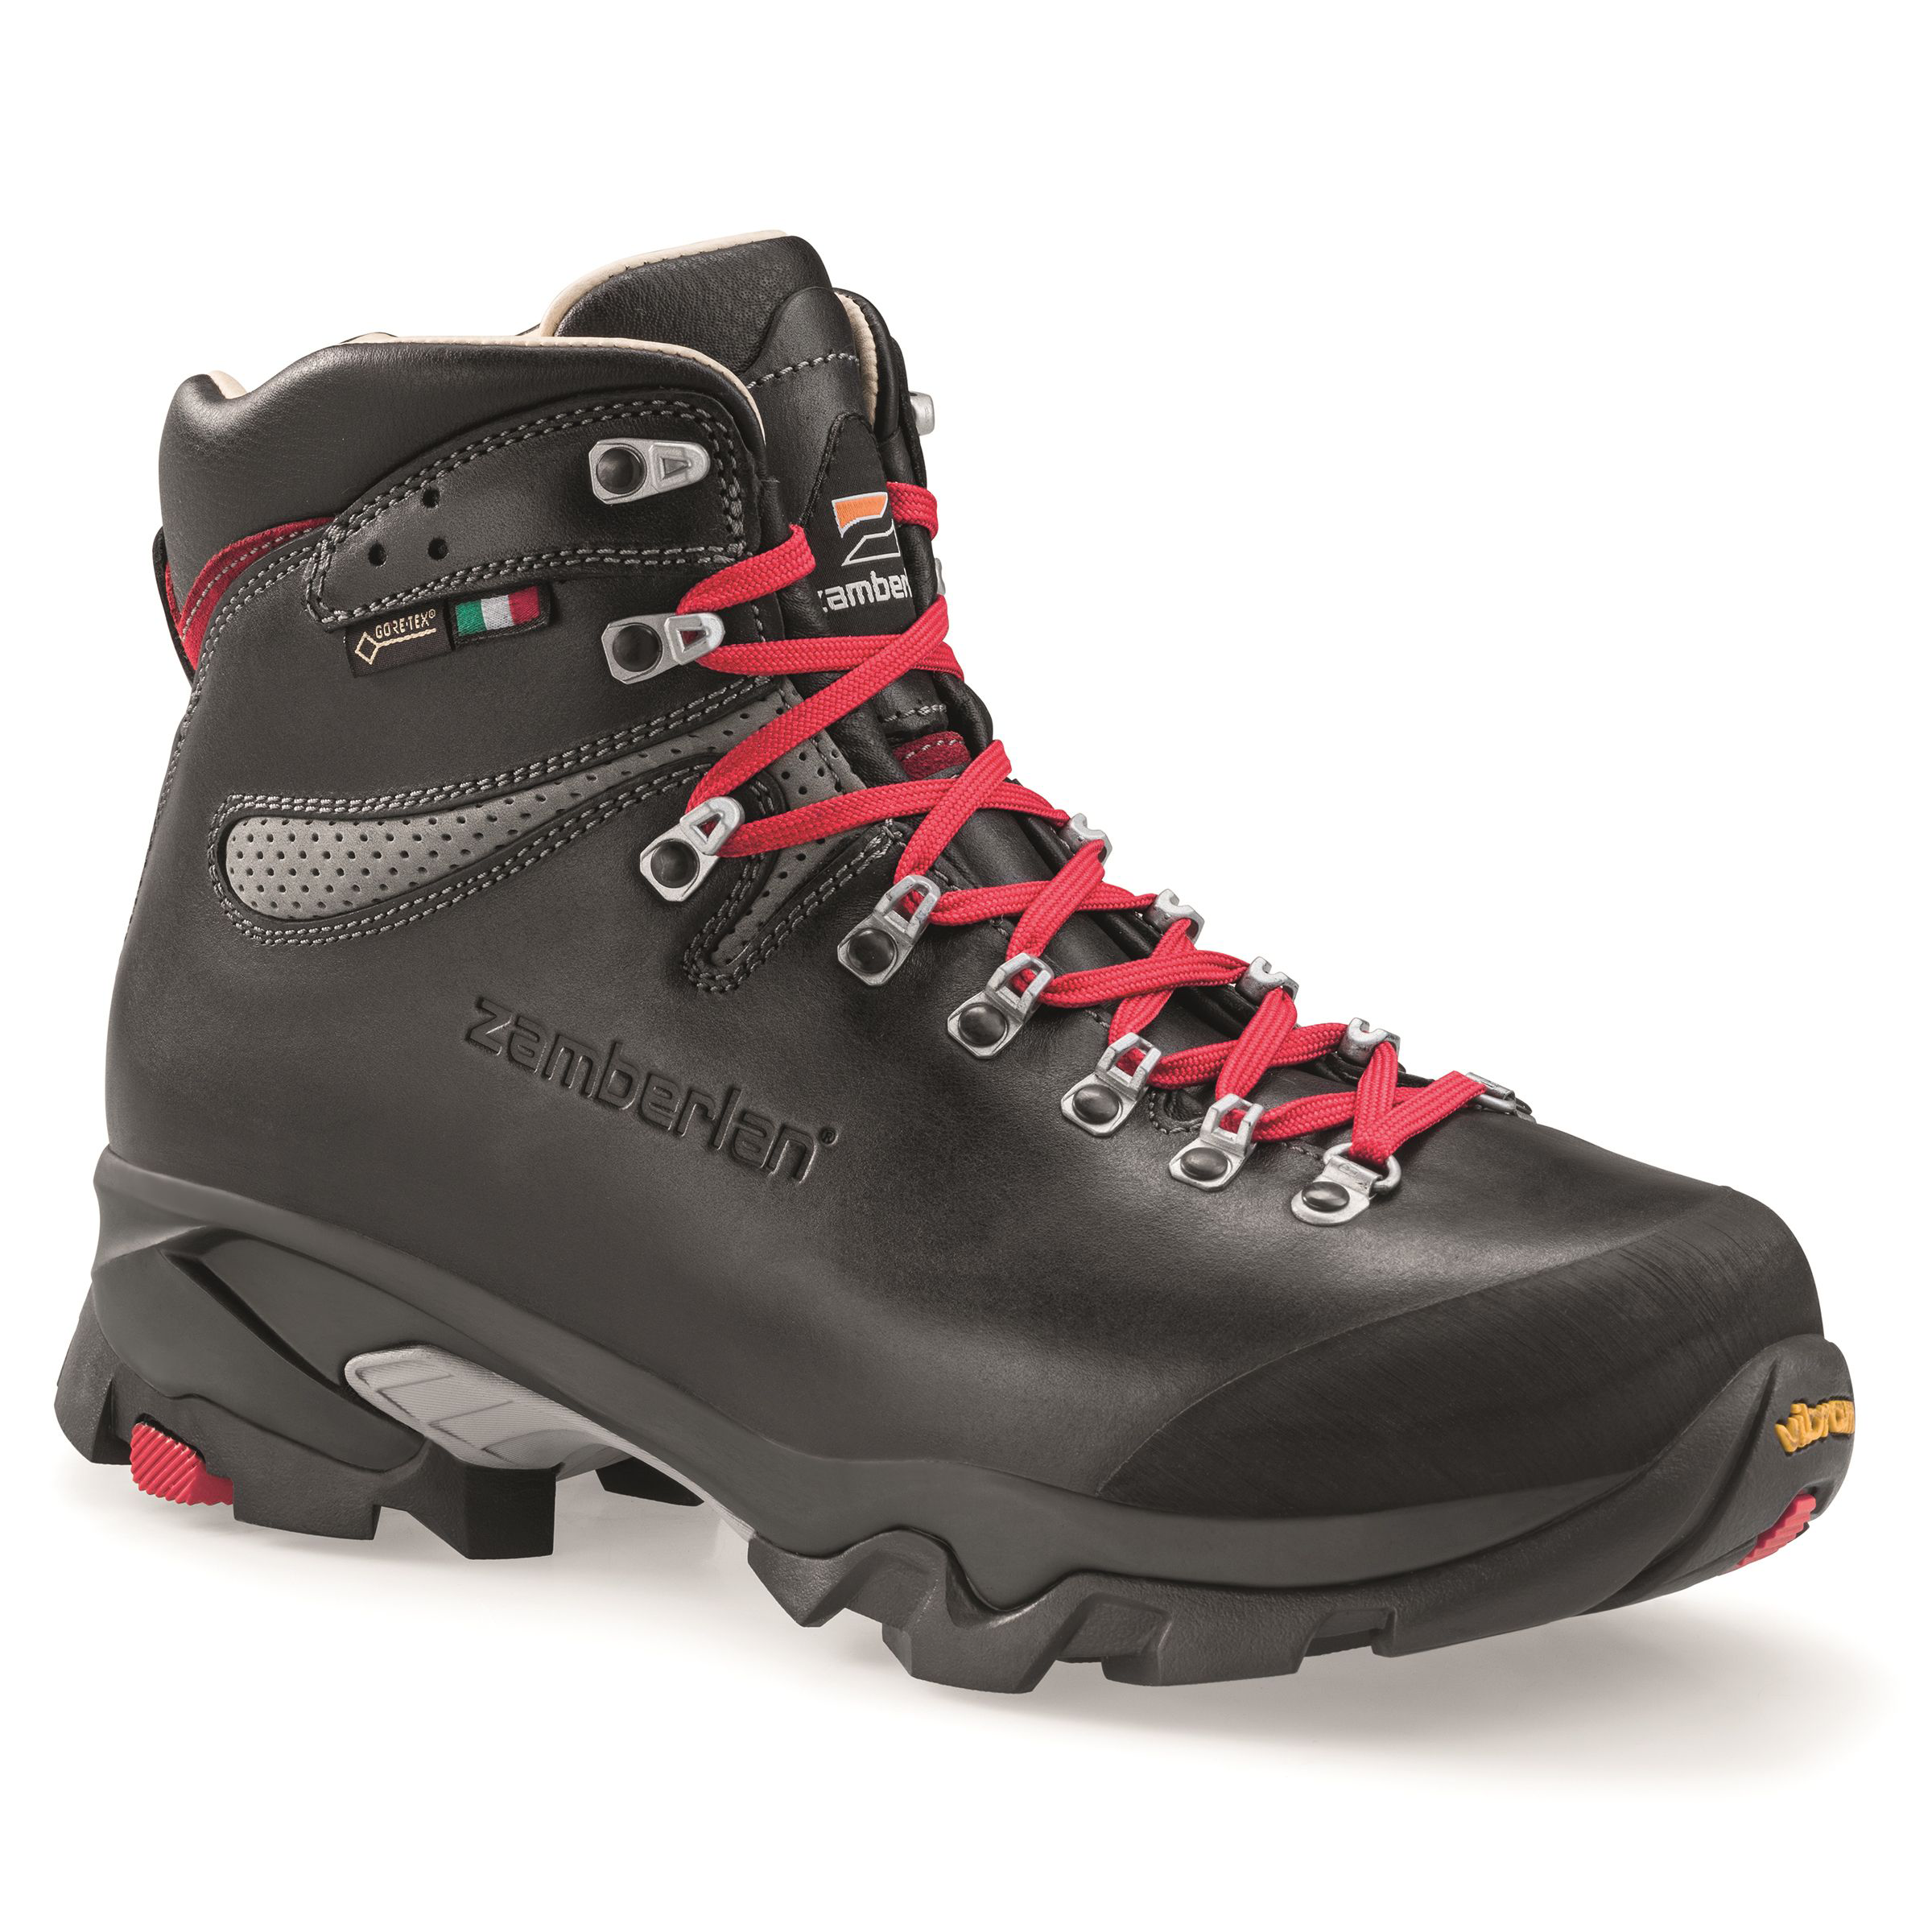 Zamberlan 1996 Vioz Lux GTX RR Waterproof Hiking Boots for Men - Waxed Black - 7.5M